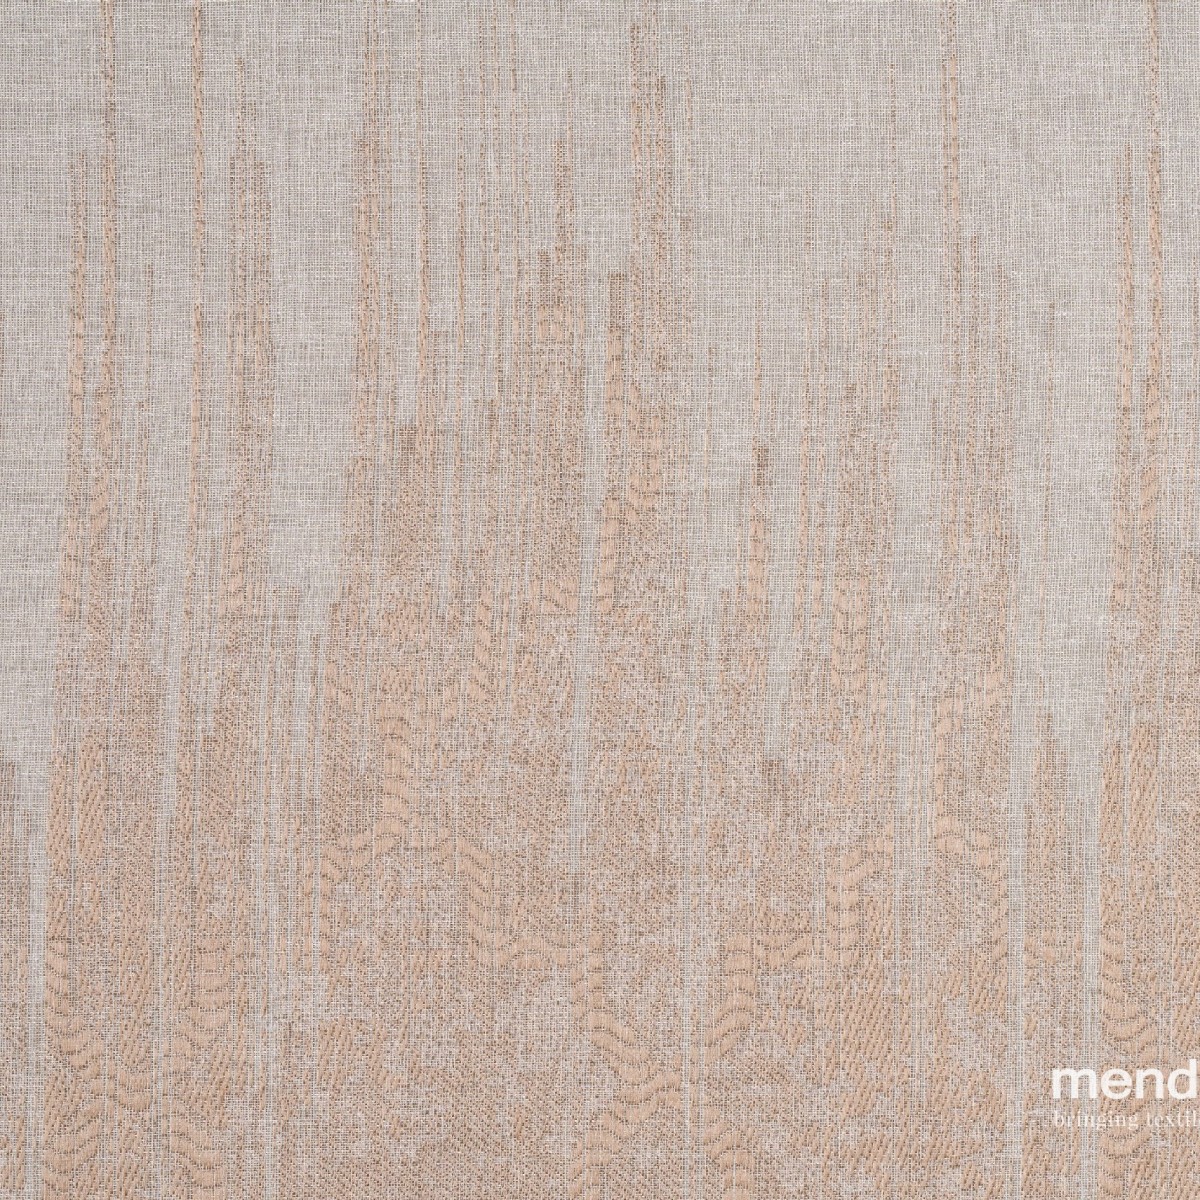 Perdele Mendola fabrics MDF-325-RONDA. Conține culorile: Gri, Gri Mătase, Gri, Gri-Bej, Portocaliu, Portocaliu Pastel, Maro, Maro Terra, Alb, Alb Trafic